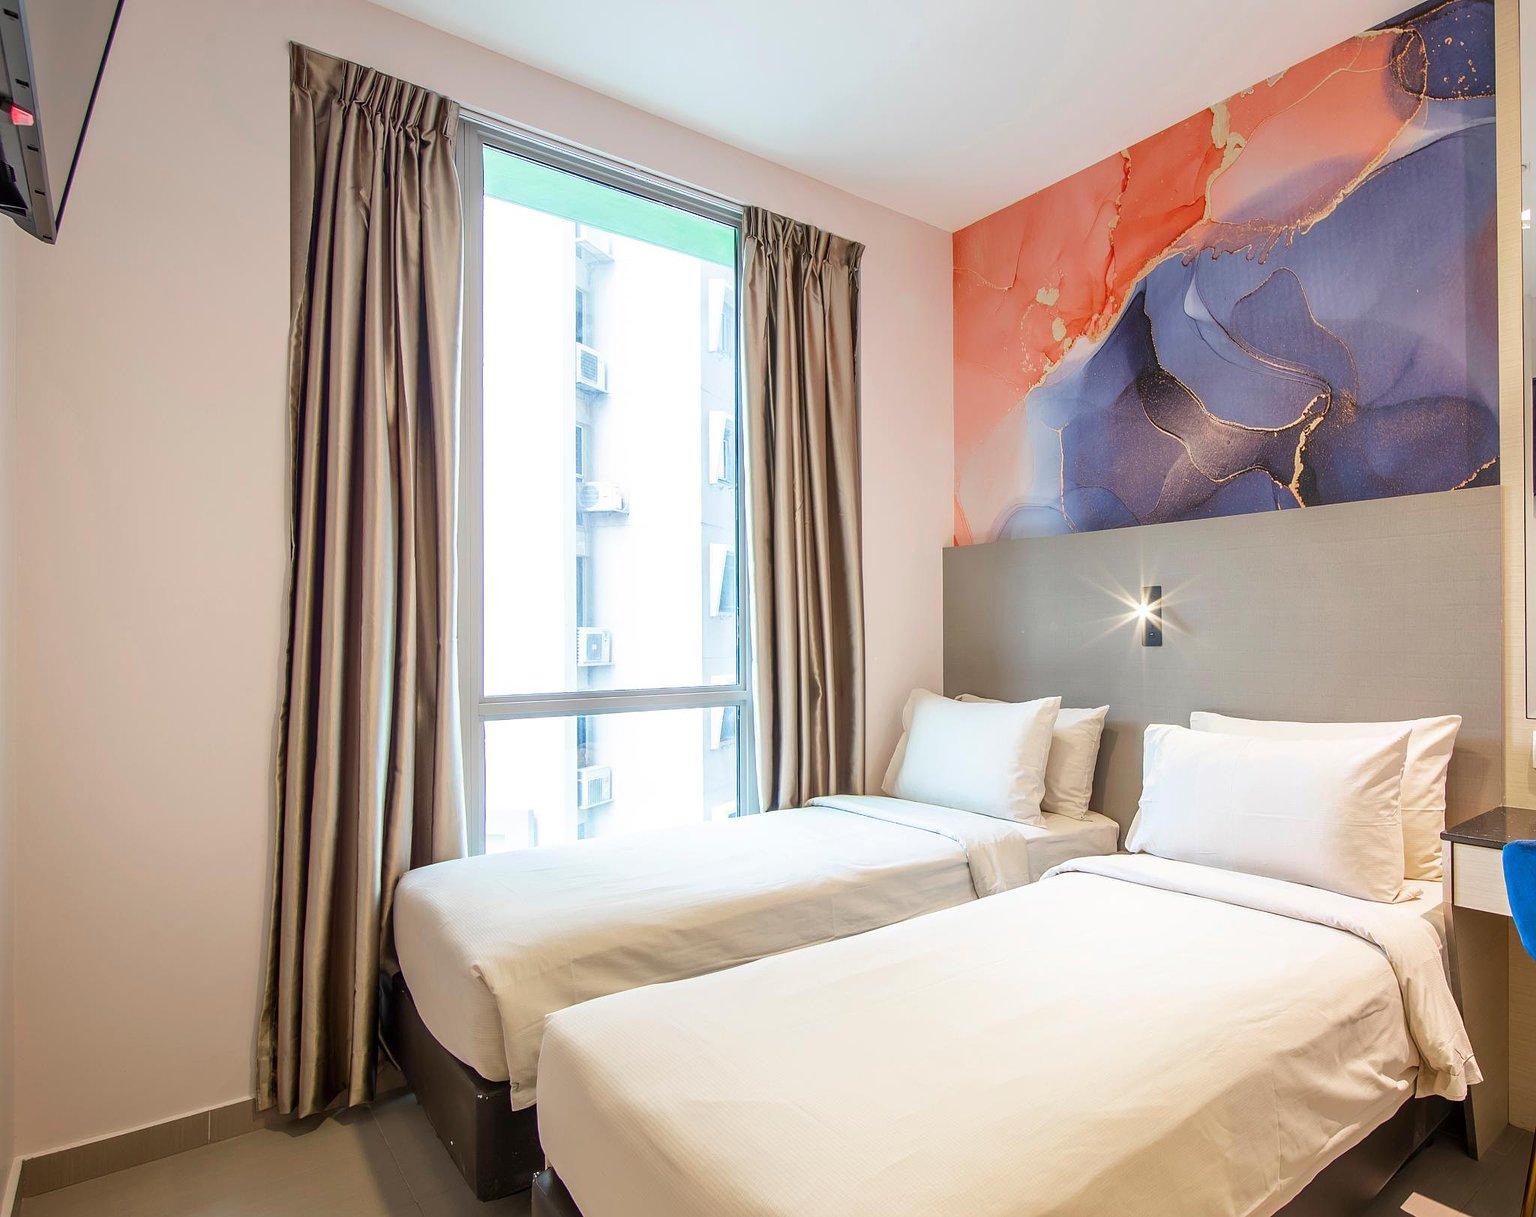 Standard Room With 2 Single Beds - 宜必思尚品新加坡阿爾伯特酒店 / ibis Styles Singapore Albert